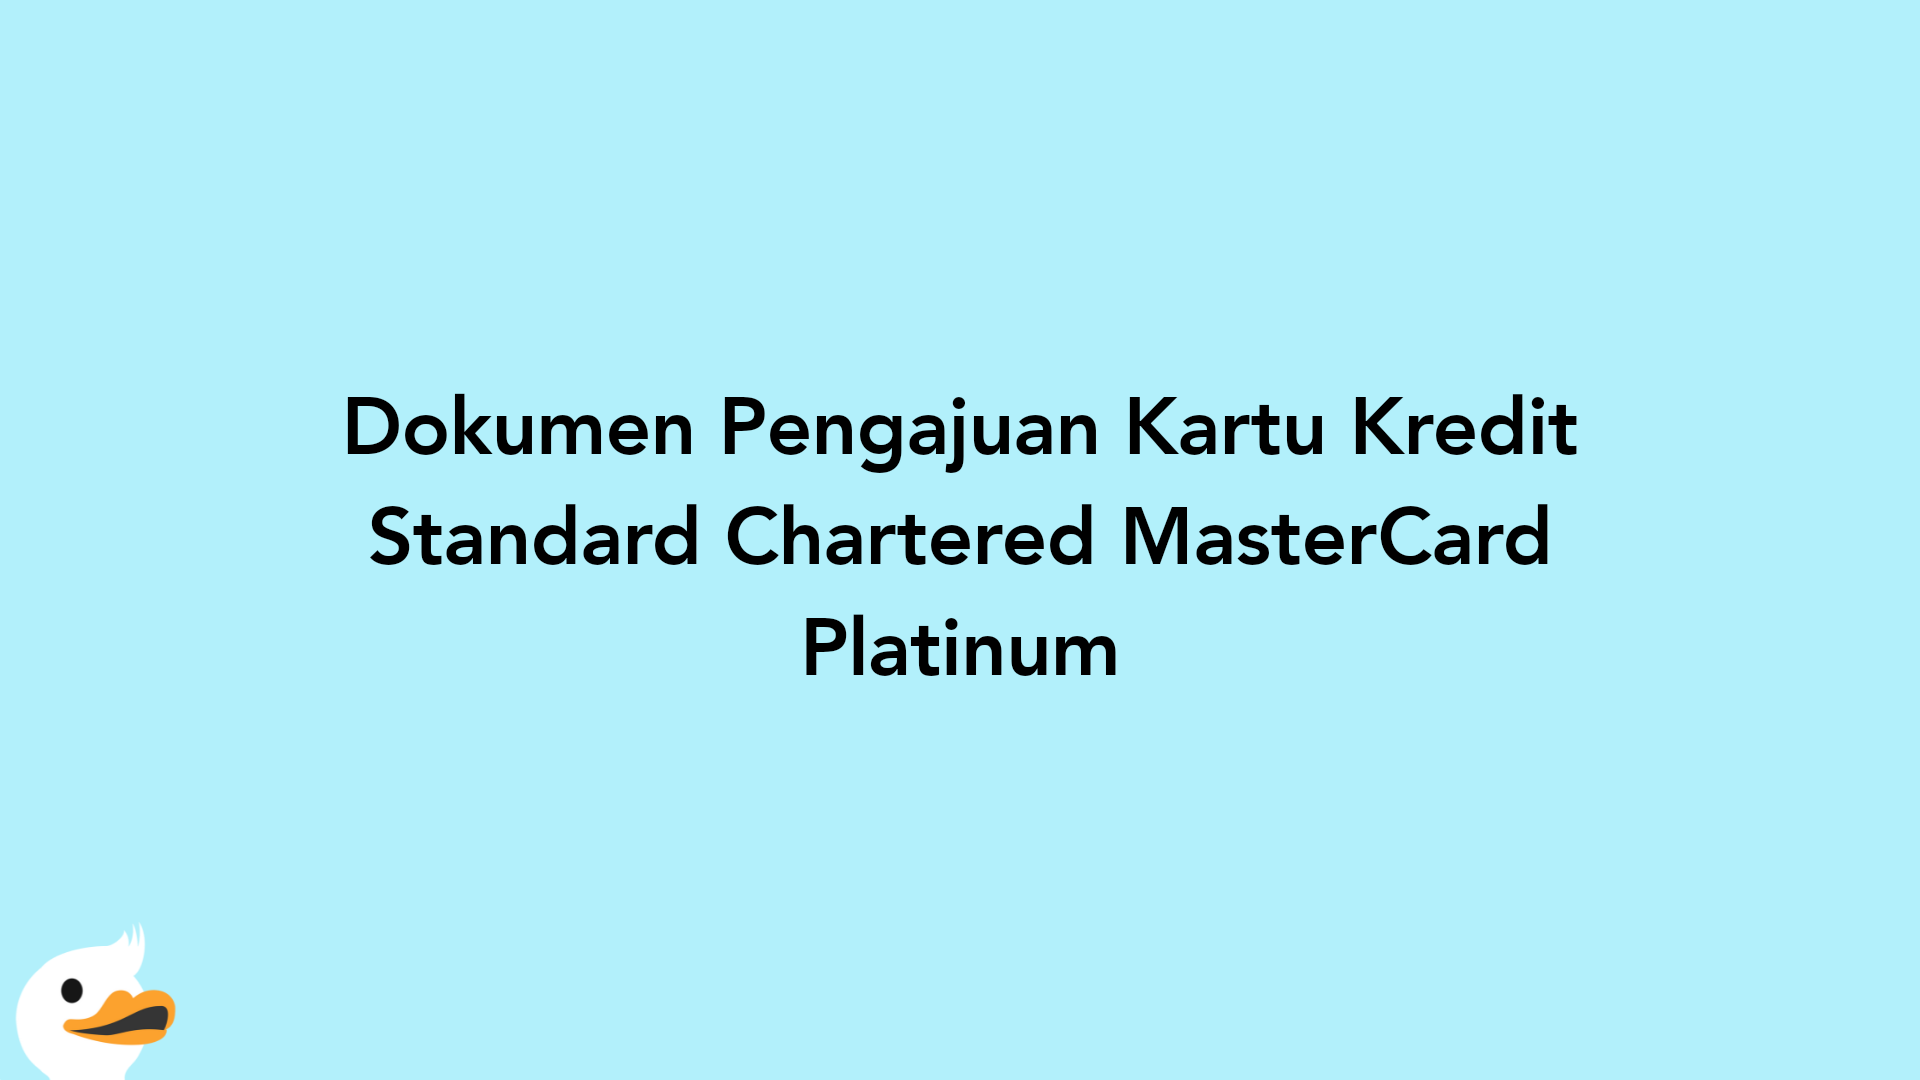 Dokumen Pengajuan Kartu Kredit Standard Chartered MasterCard Platinum